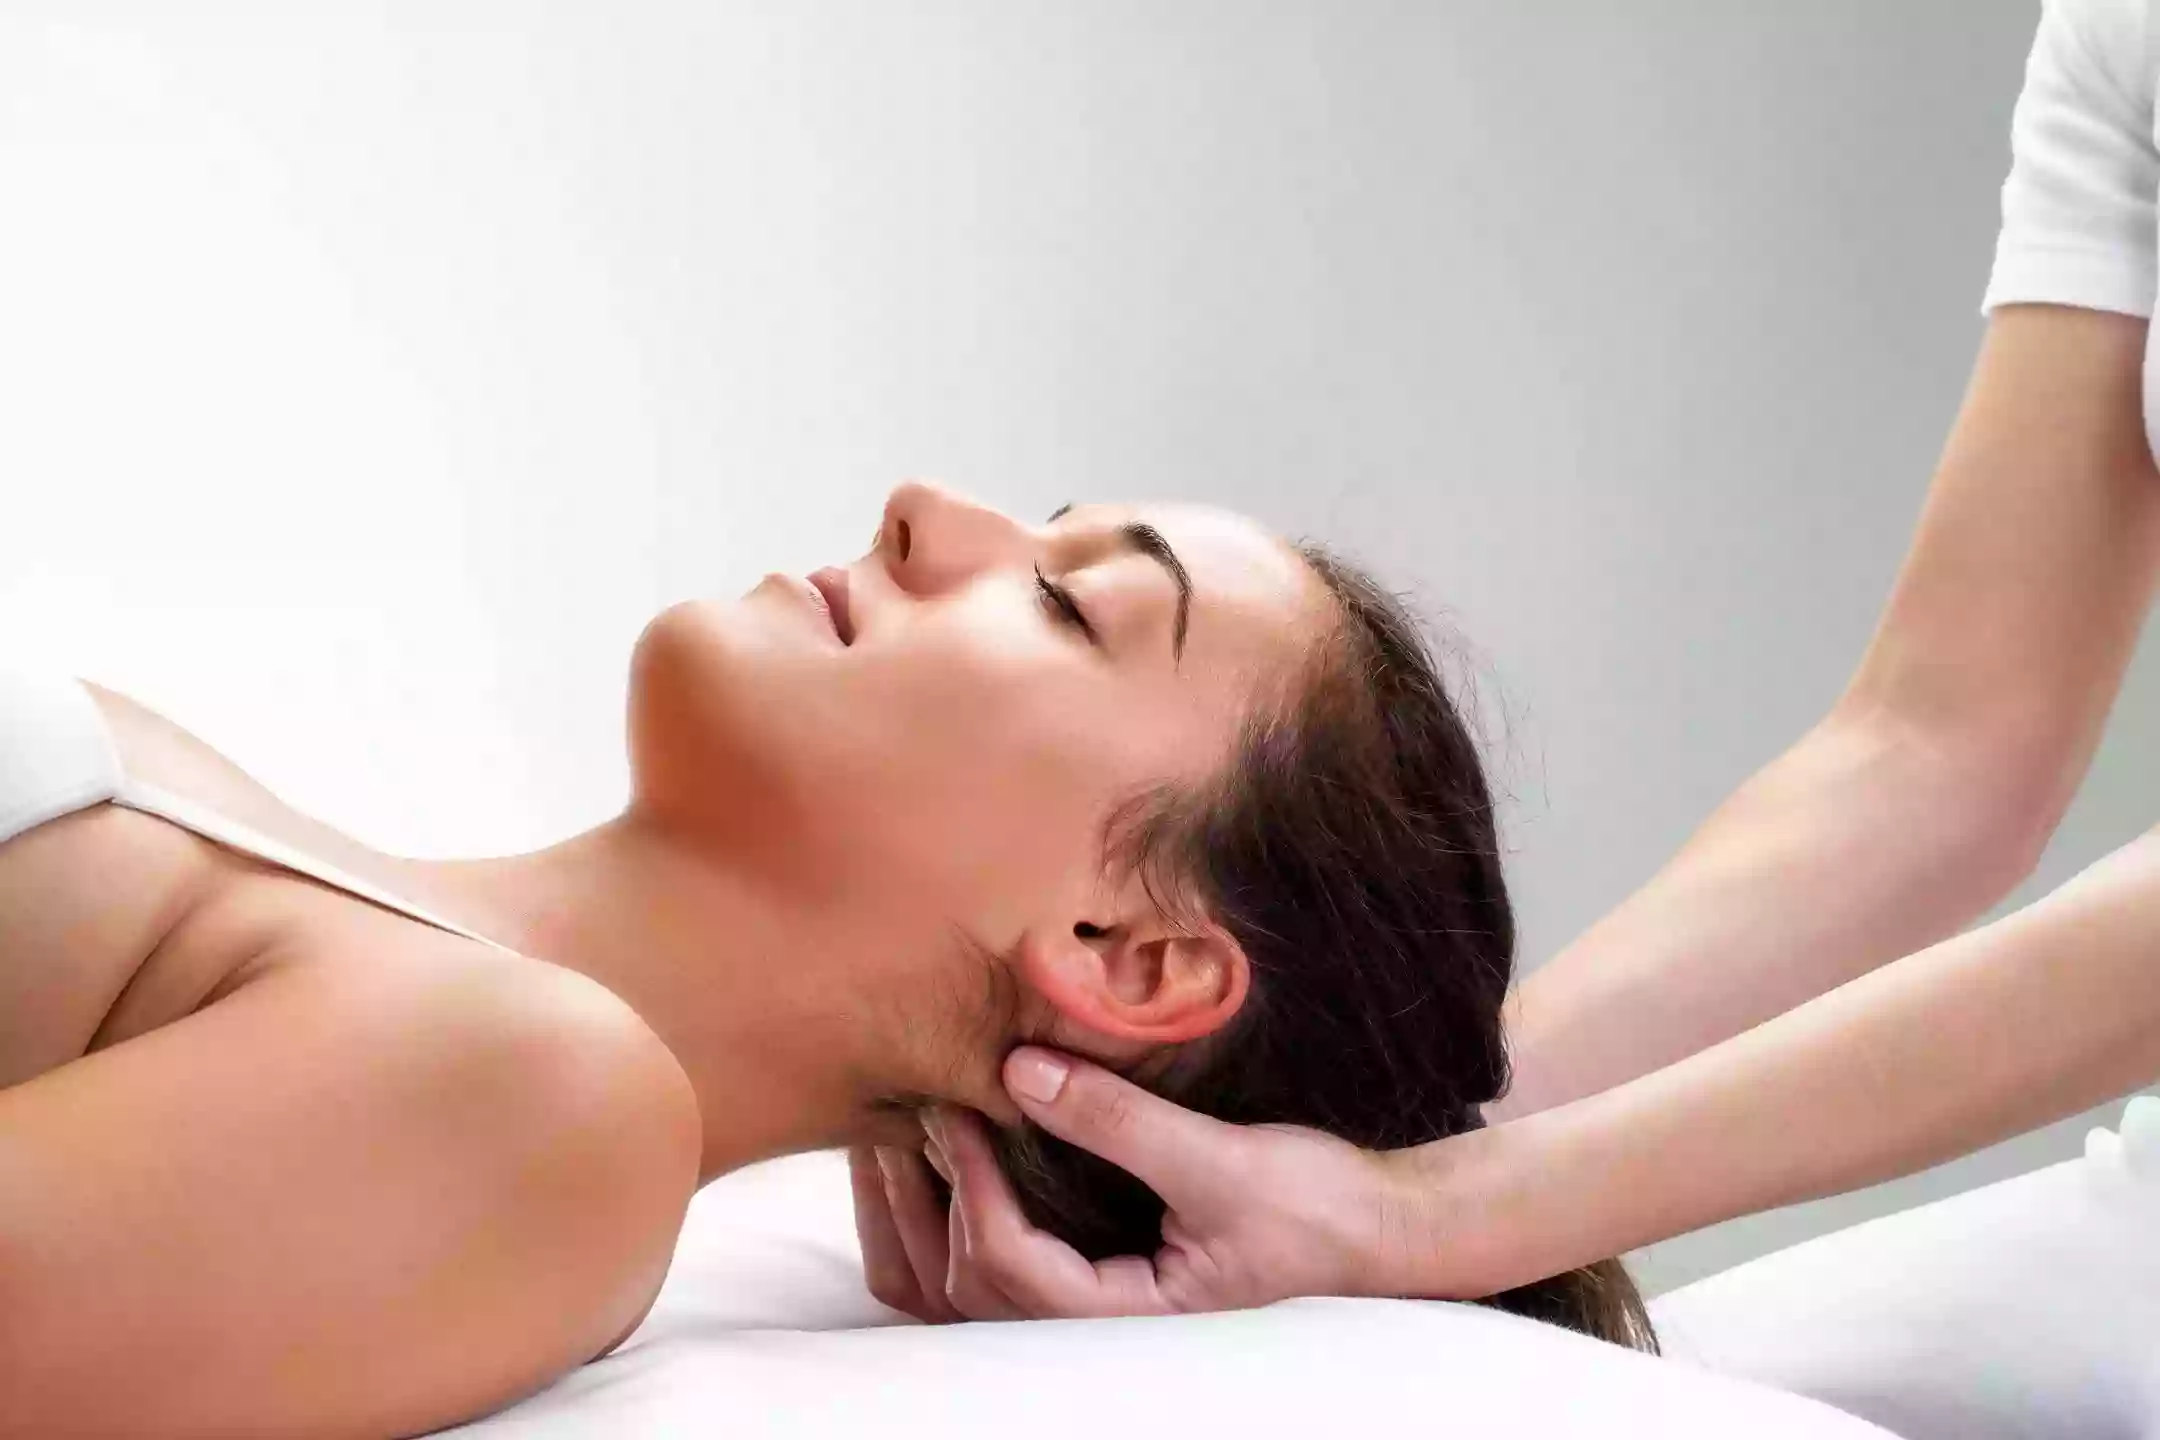 Fusion Massage Therapy